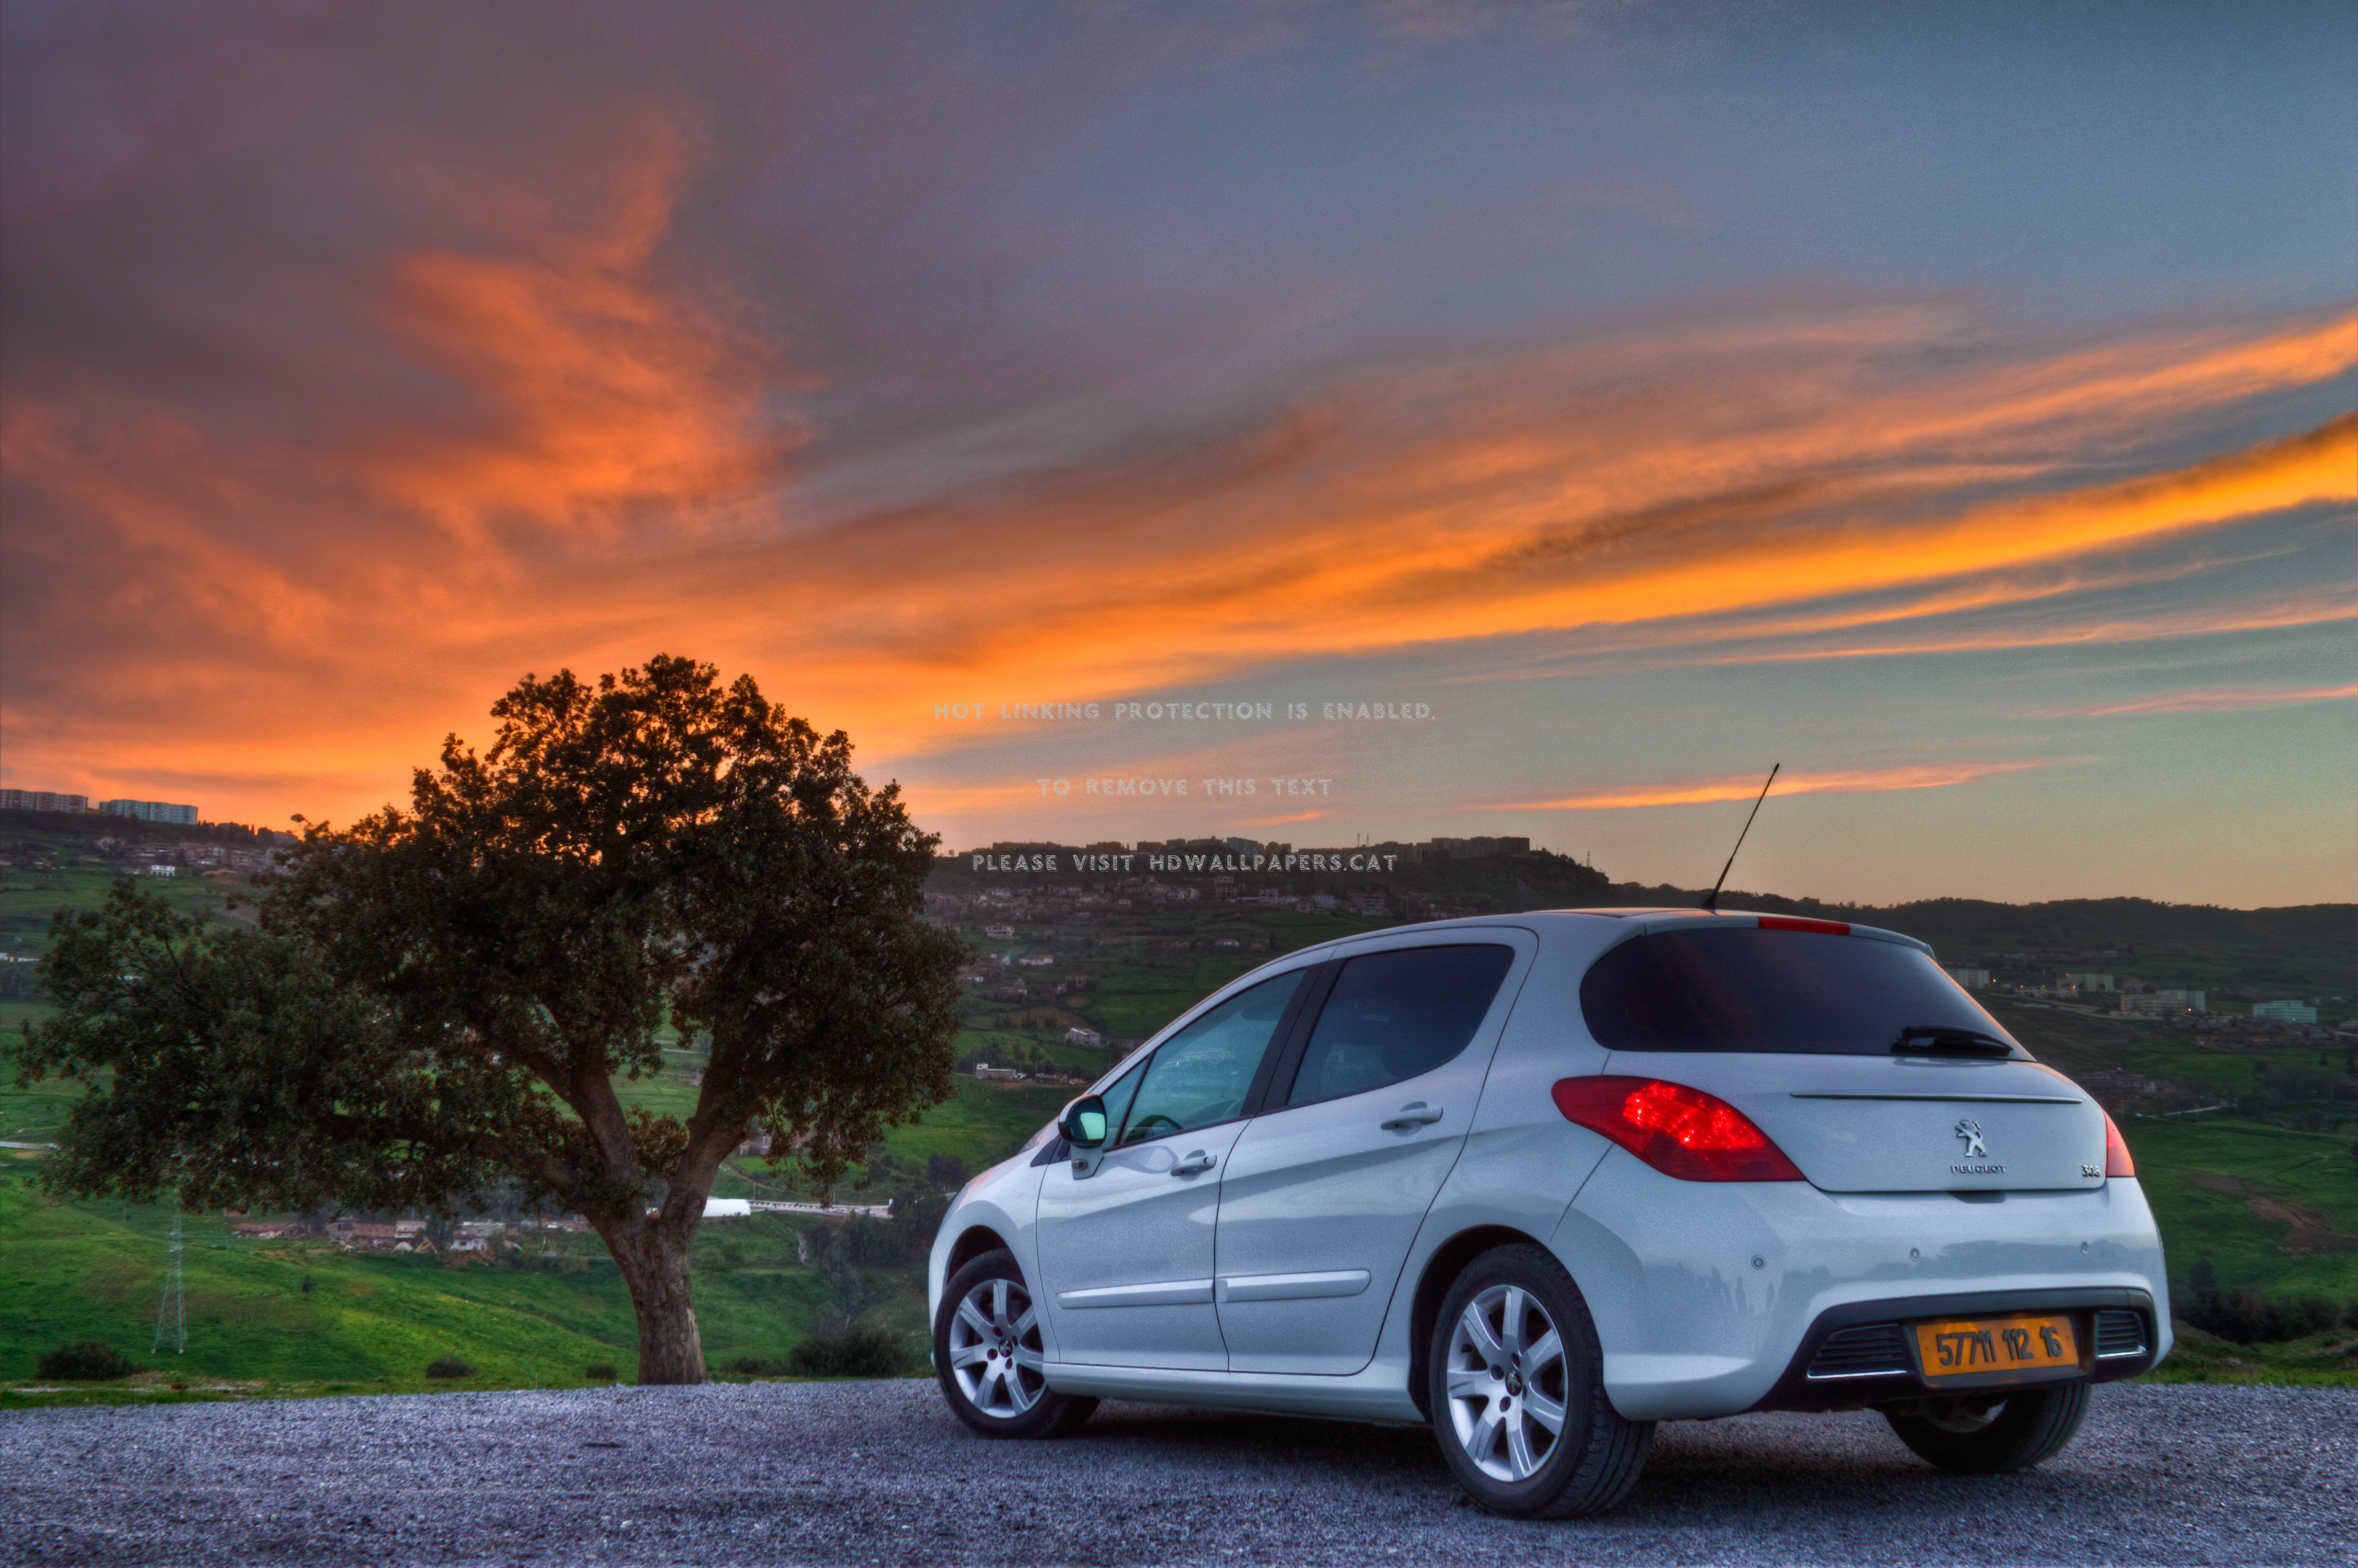 Peugeot 207 , HD Wallpaper & Backgrounds